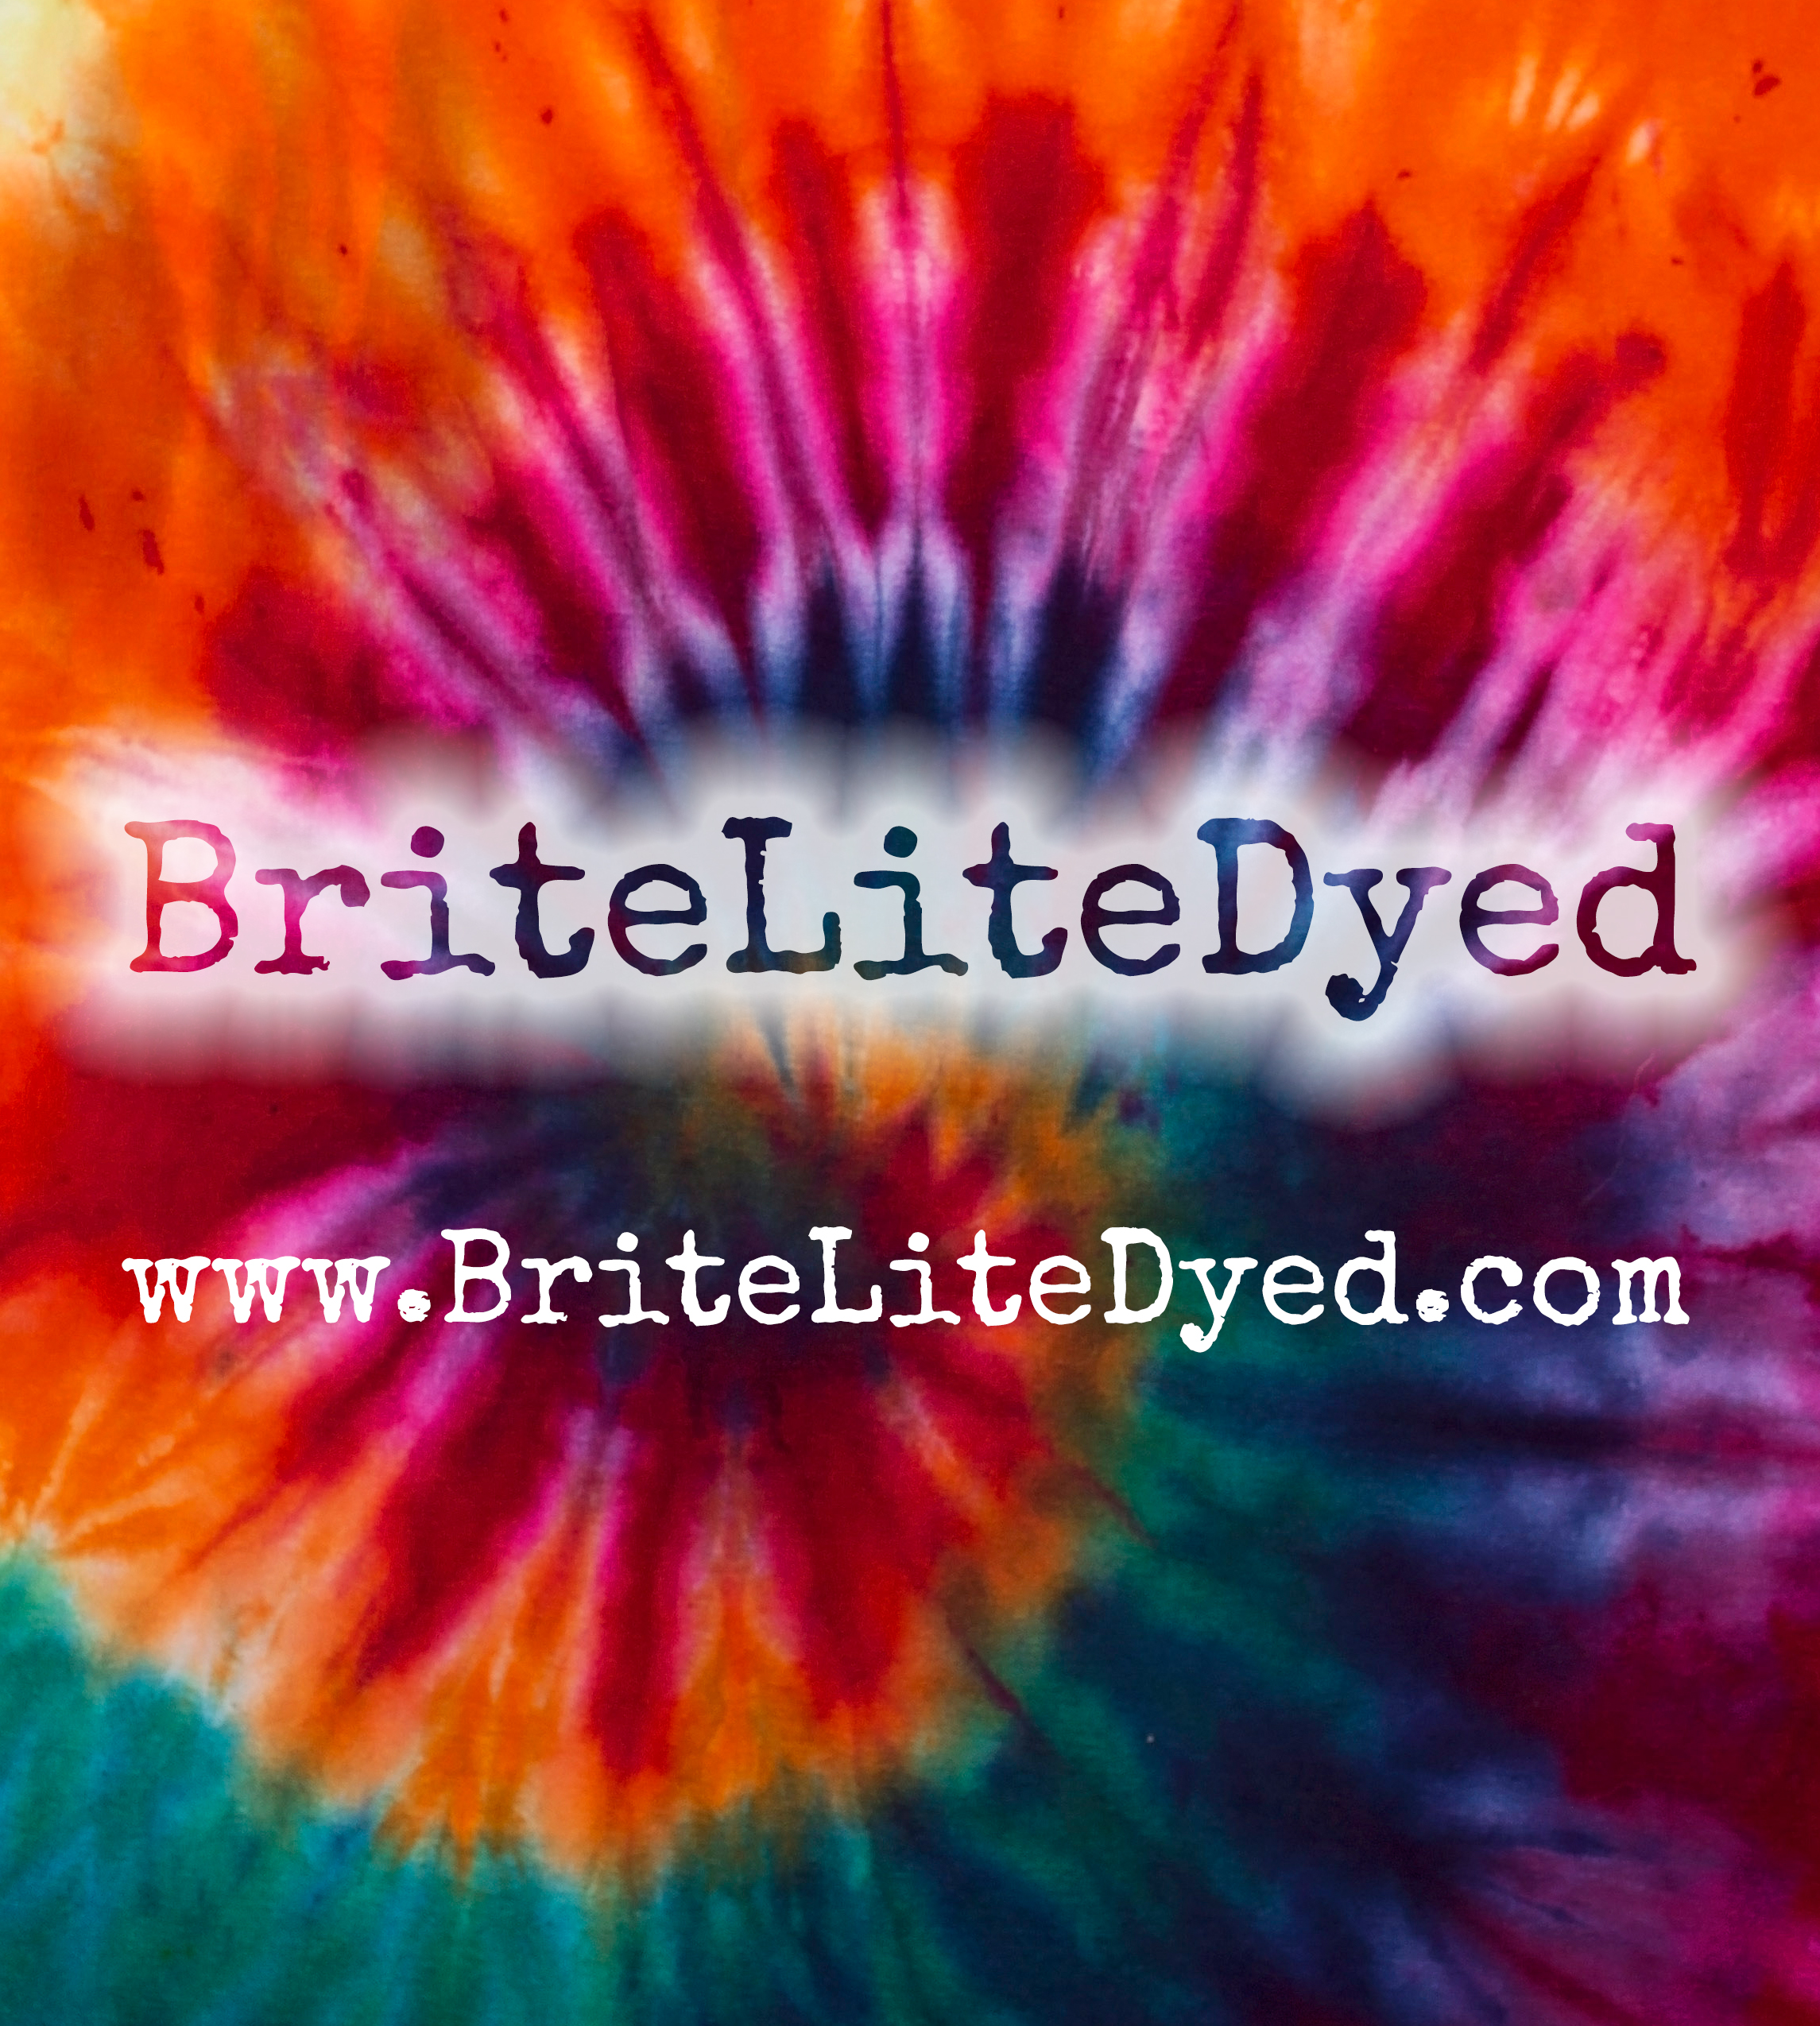 www.BriteLiteDyed.com